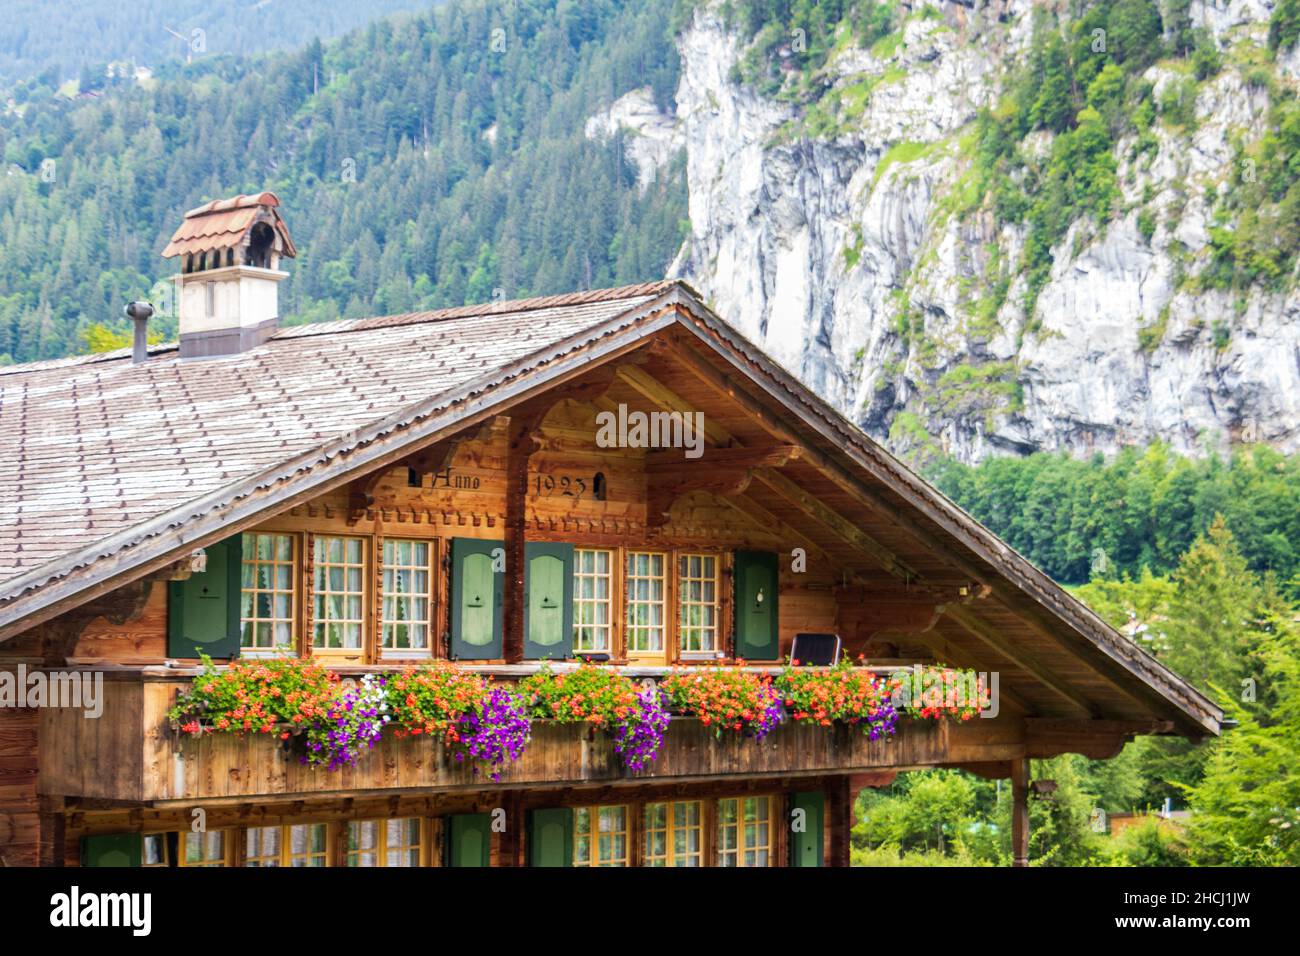 Swiss architecture wooden house with summer flowers in Lauterbrunnen valley, Switzerland, Europe Stock Photo